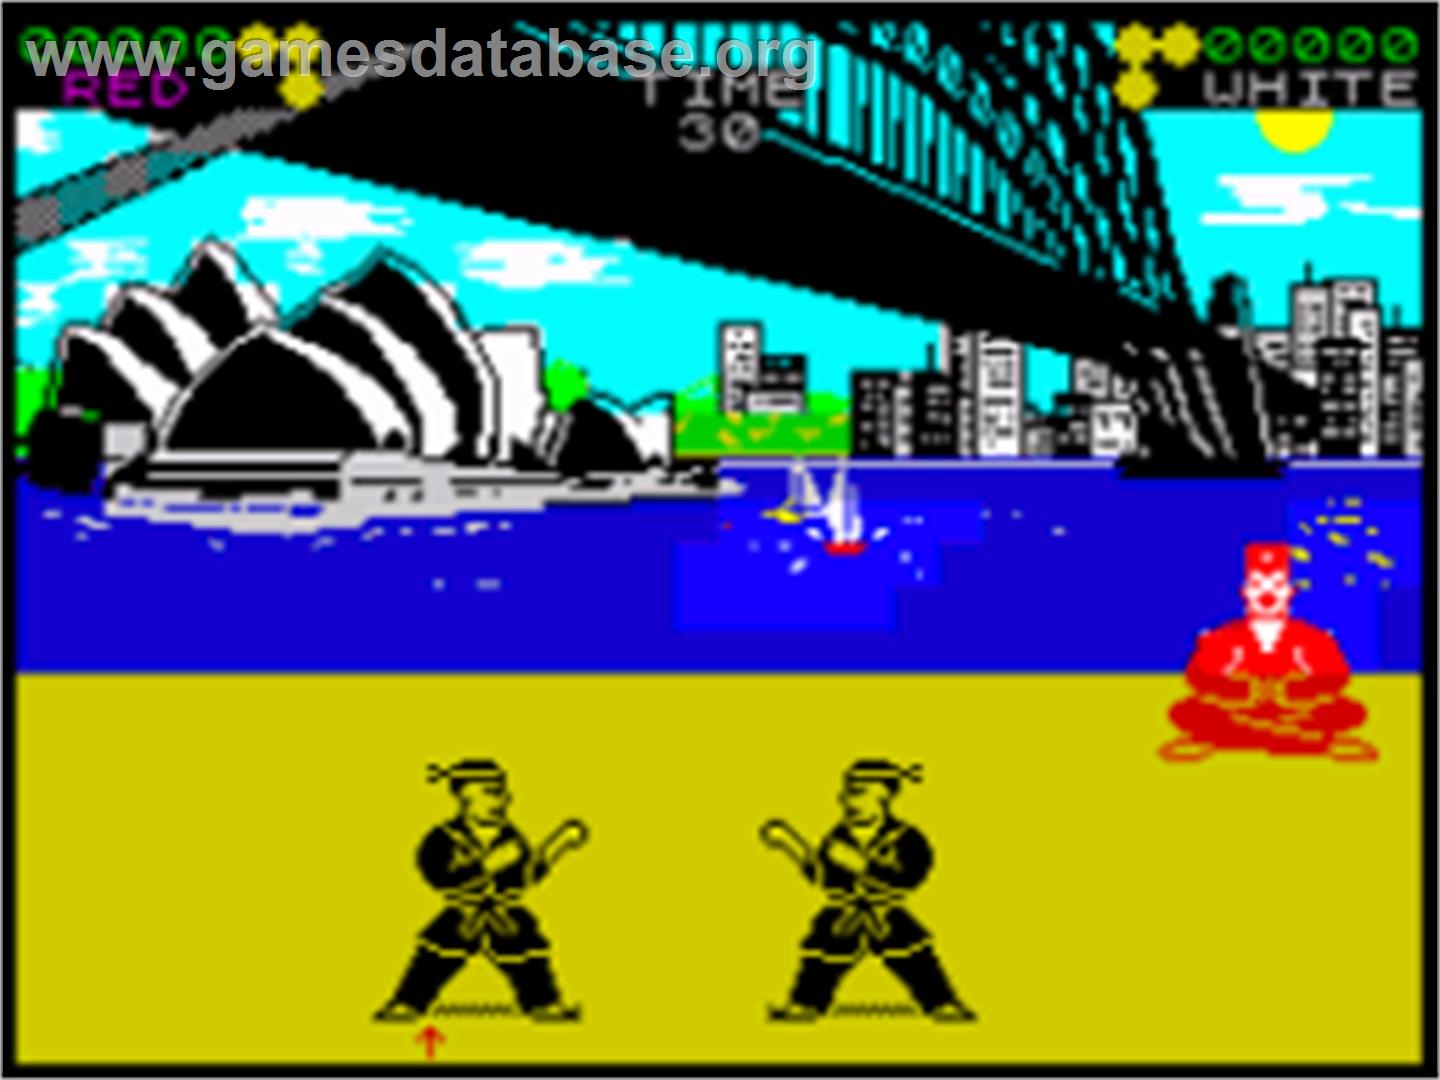 International Karate - Sinclair ZX Spectrum - Artwork - In Game